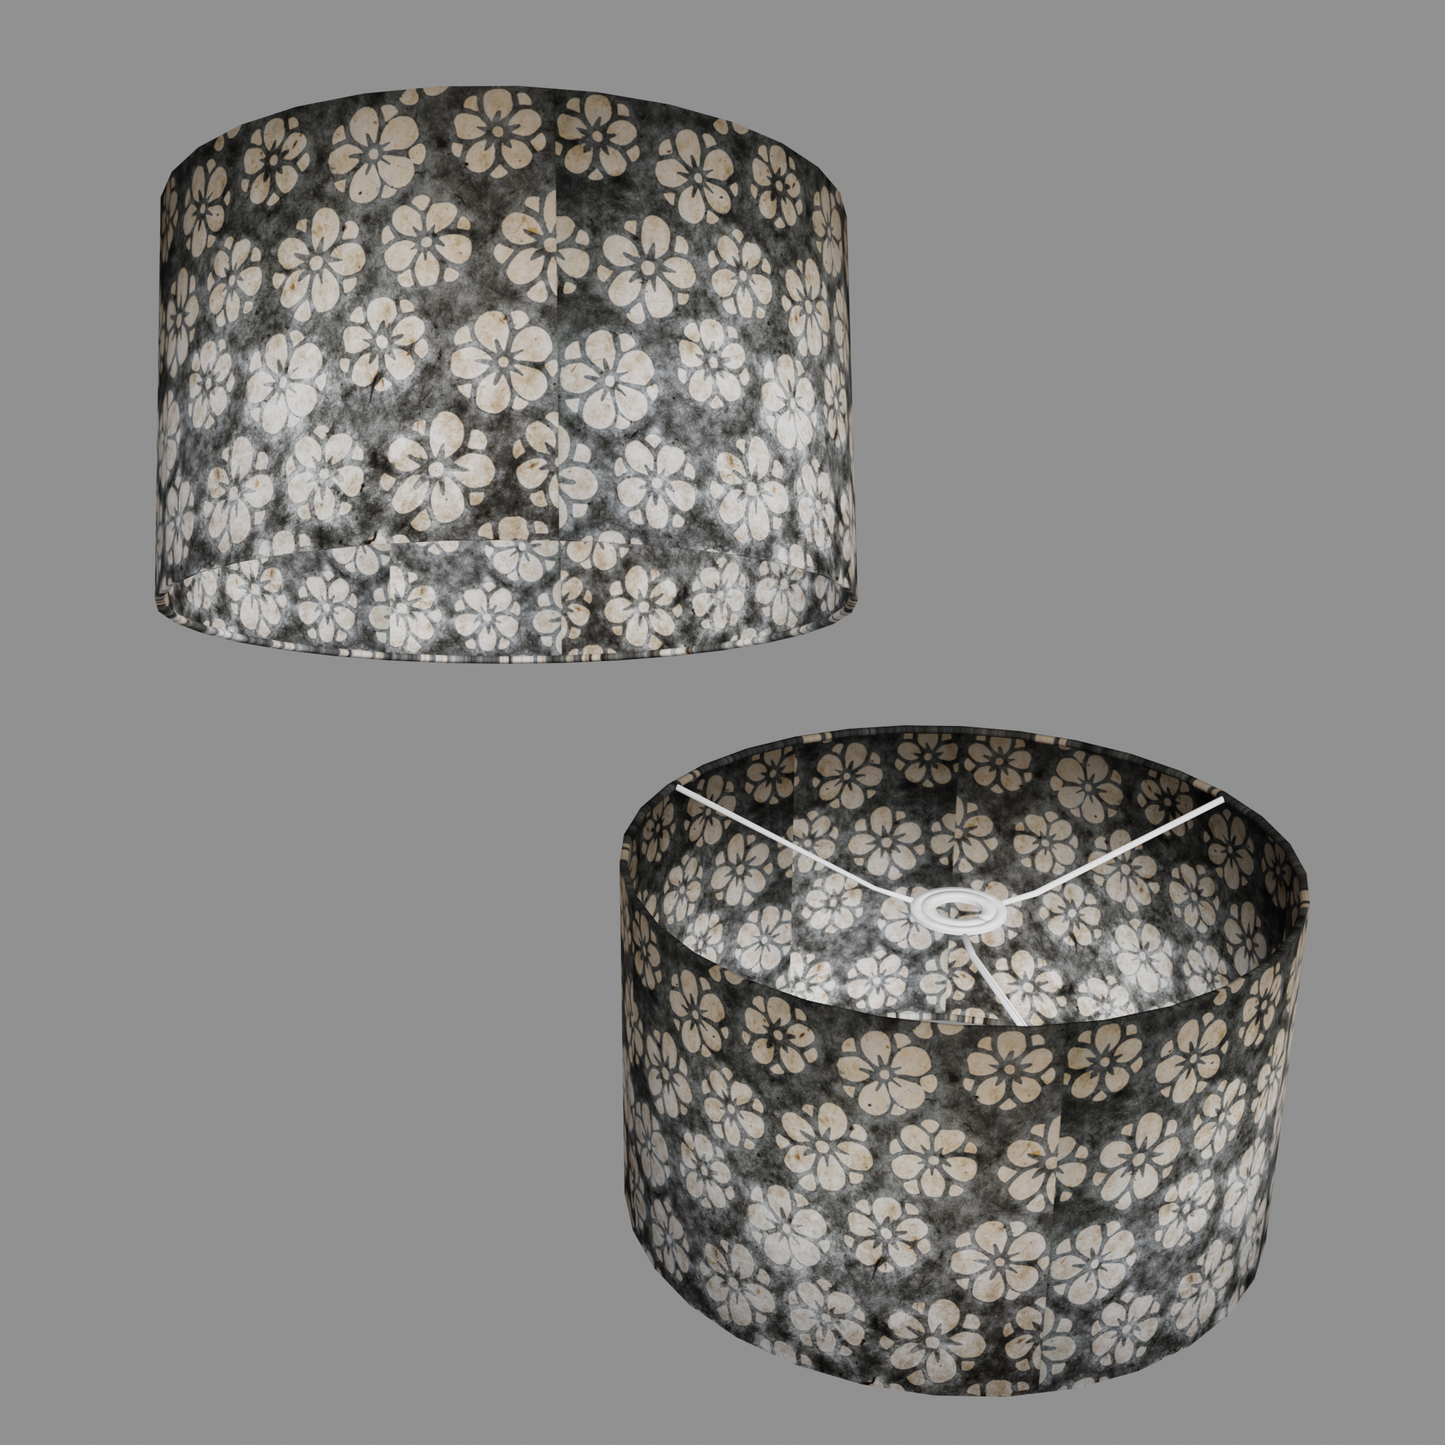 Drum Lamp Shade - P77 - Batik Star Flower Grey, 35cm(d) x 20cm(h)